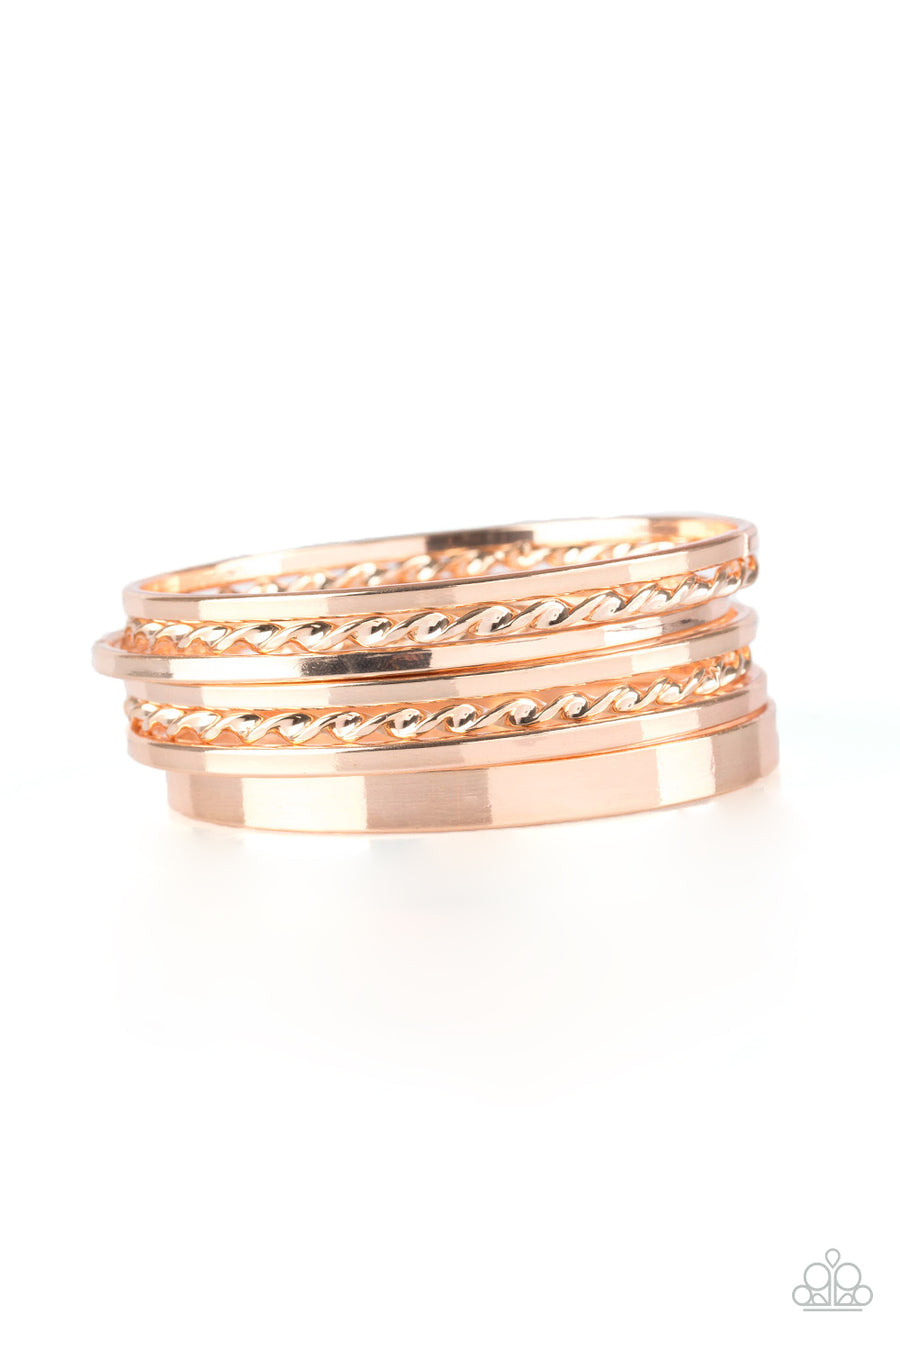 Basic Blend - Rose Gold Bangle Bracelet Set - Paparazzi Accessories